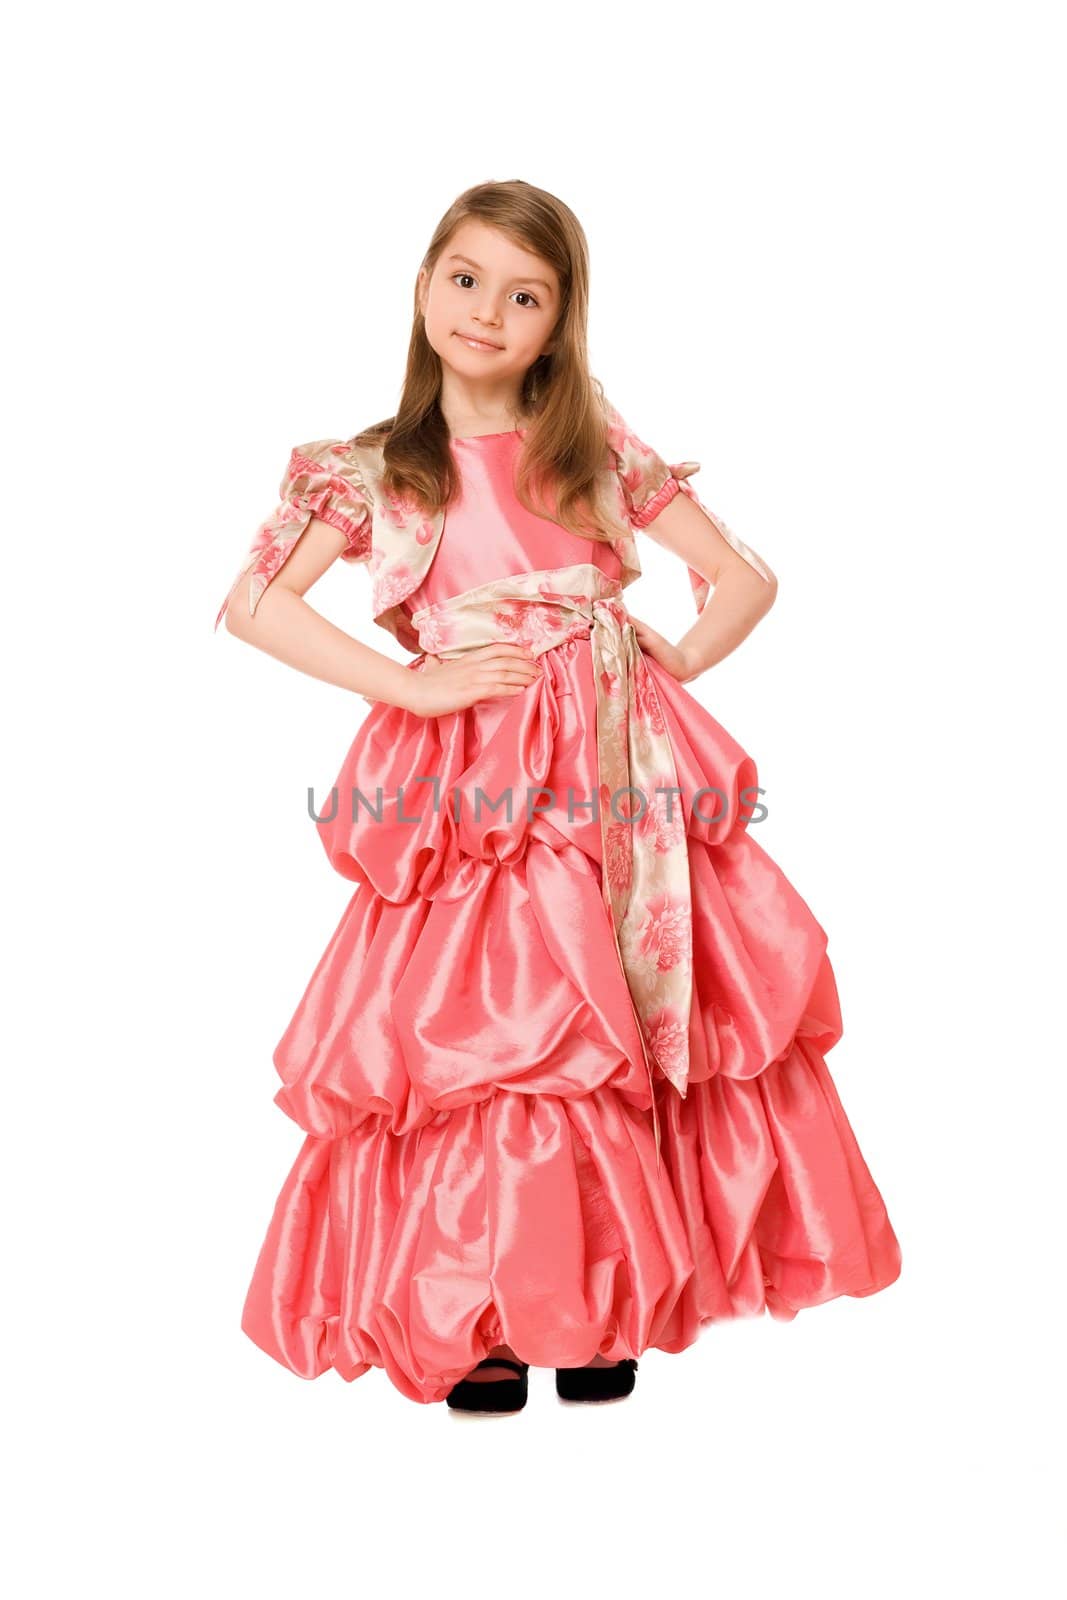 Cute little girl in a long dress by acidgrey